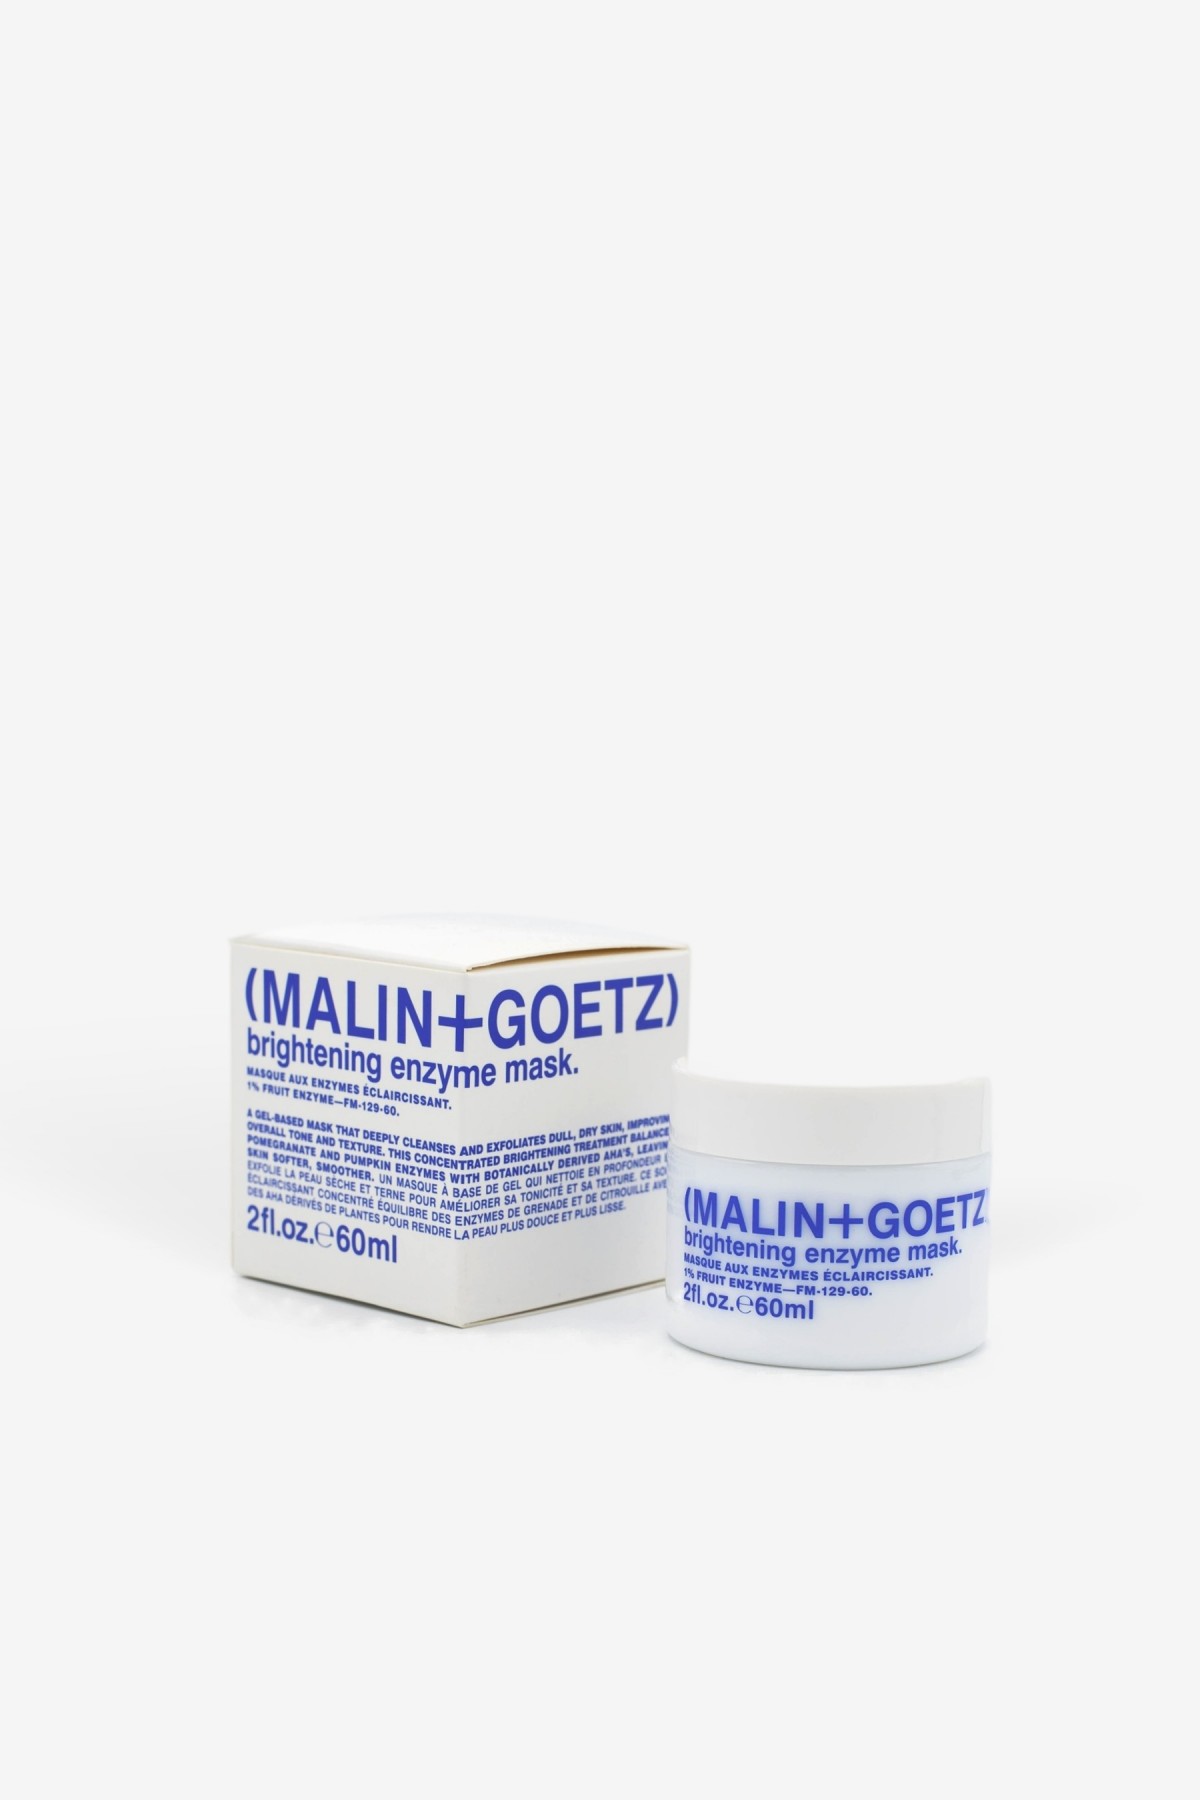 Malin+Goetz Brightening Enzyme Mask 60ml in 